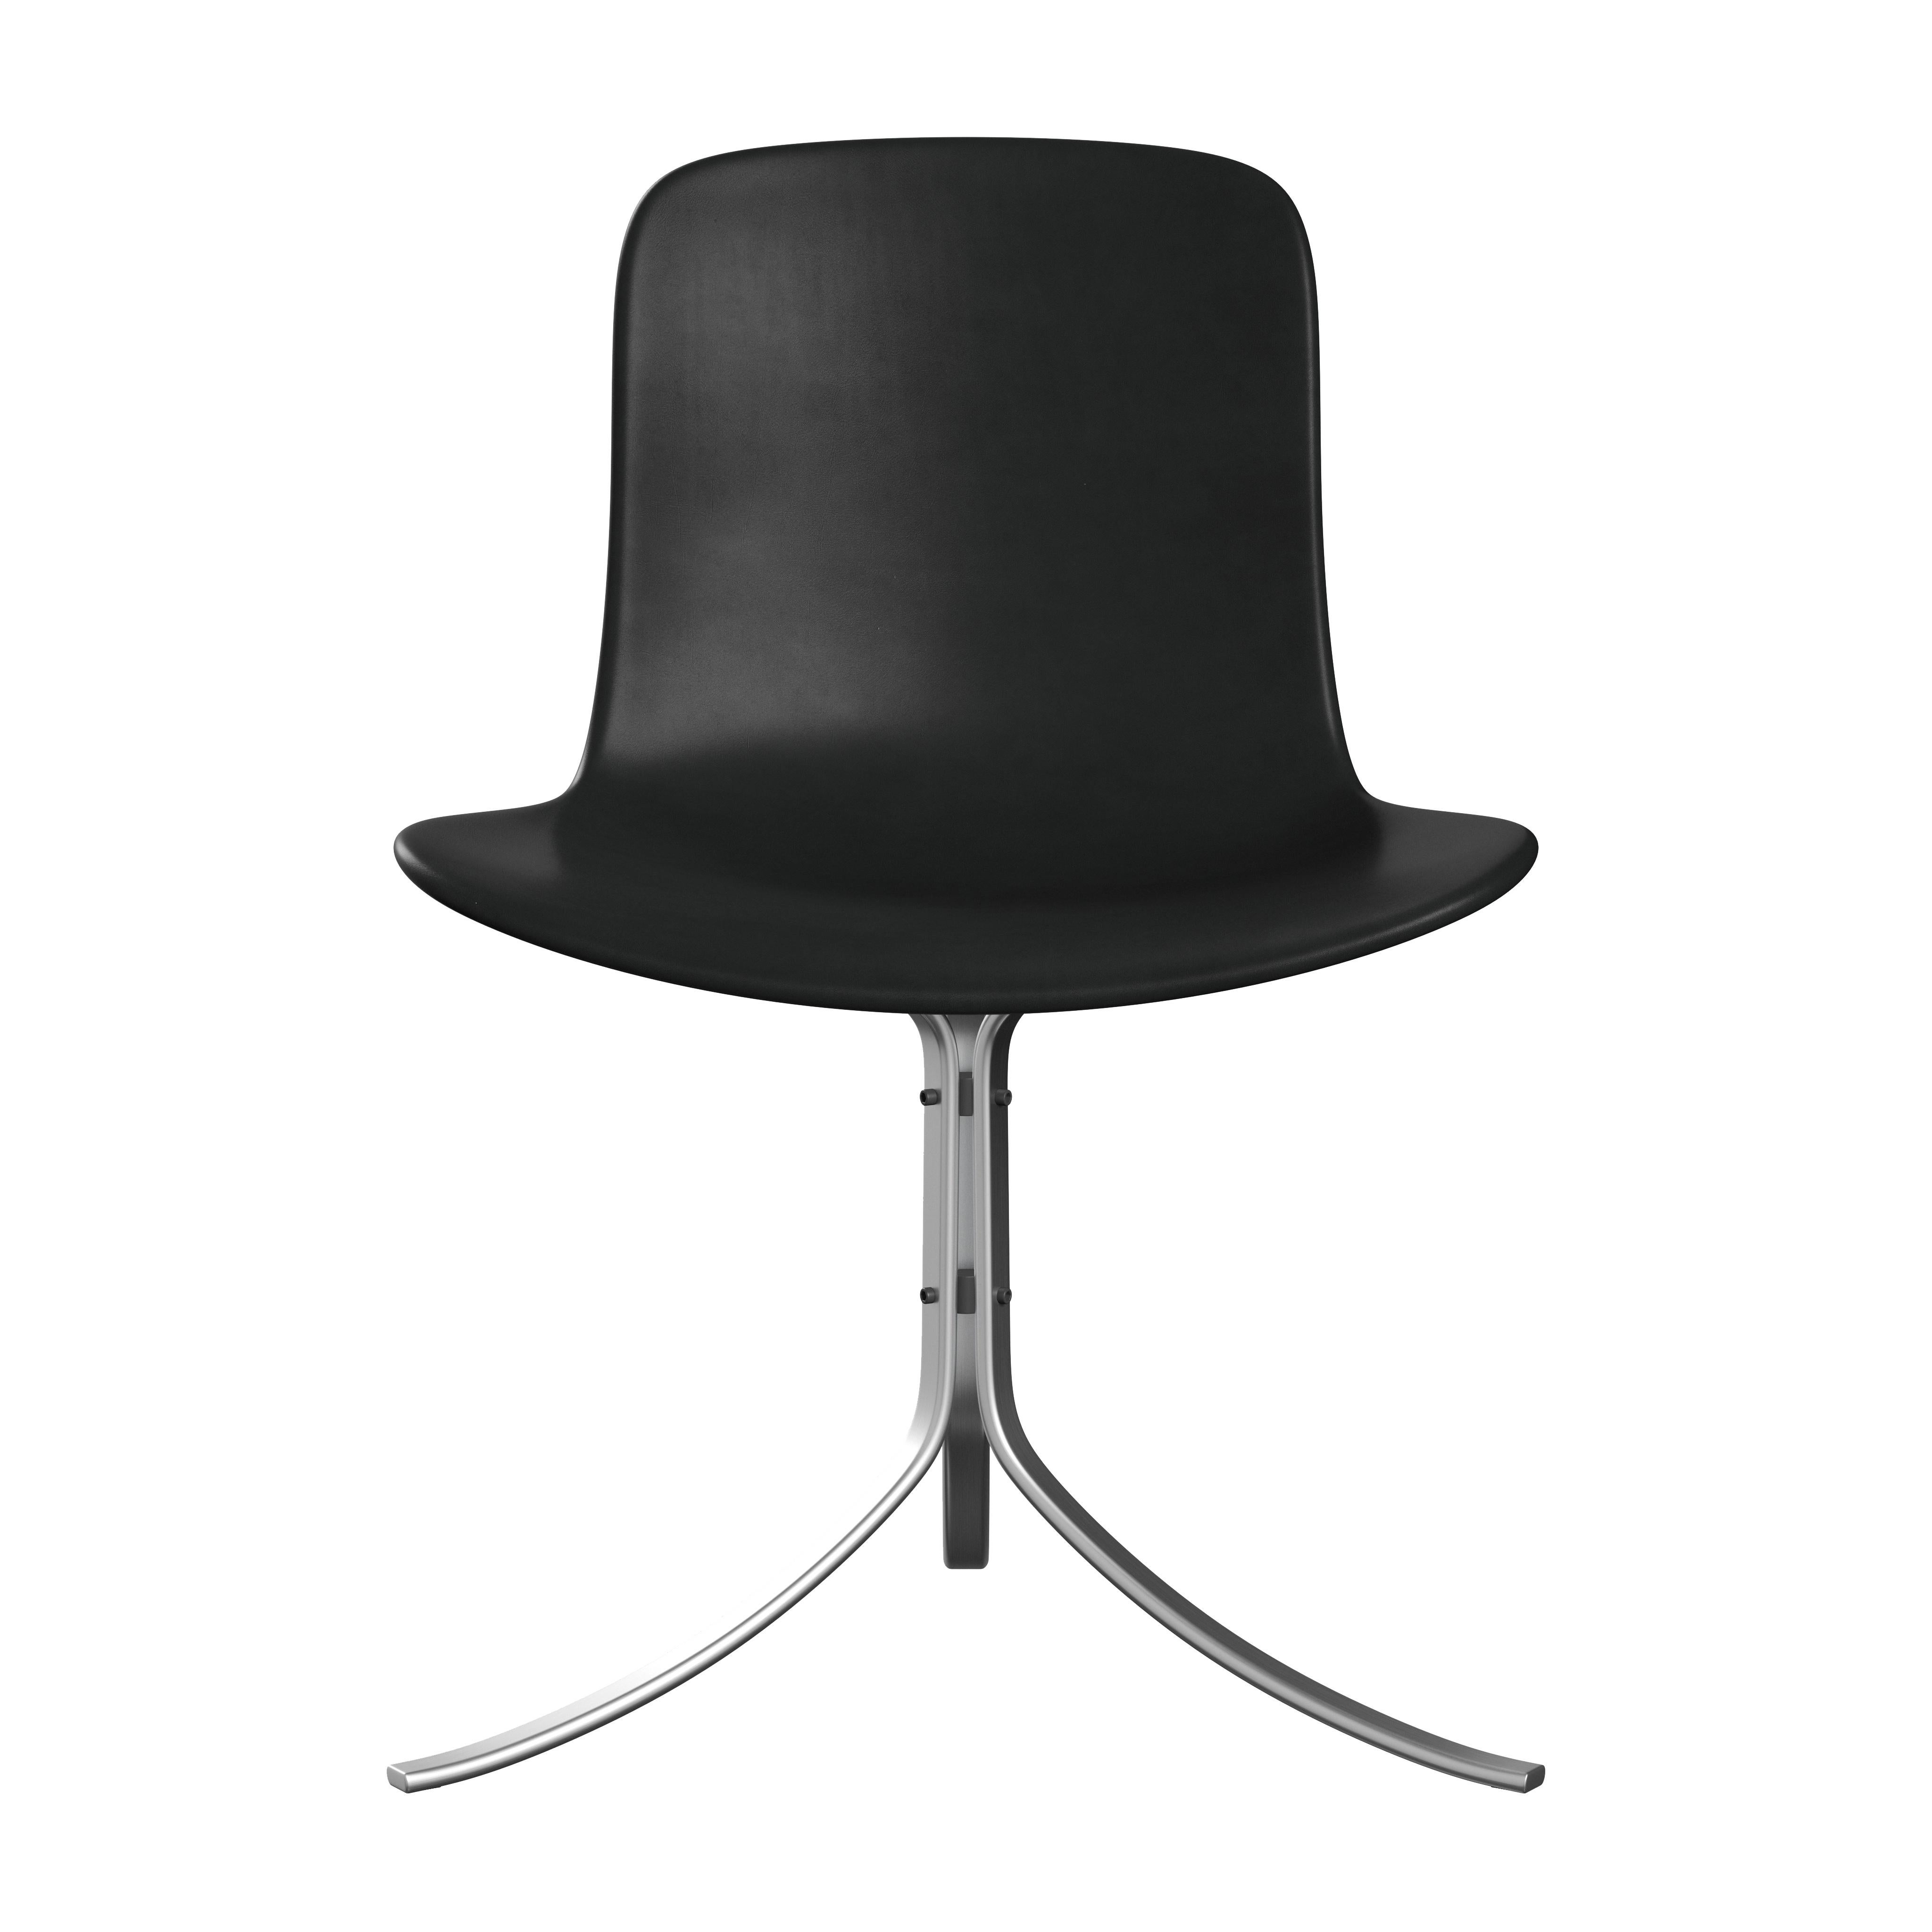 Poul Kjærholm 'PK9' Dining Chair for Fritz Hansen in Leather (Cat. 5) For Sale 3